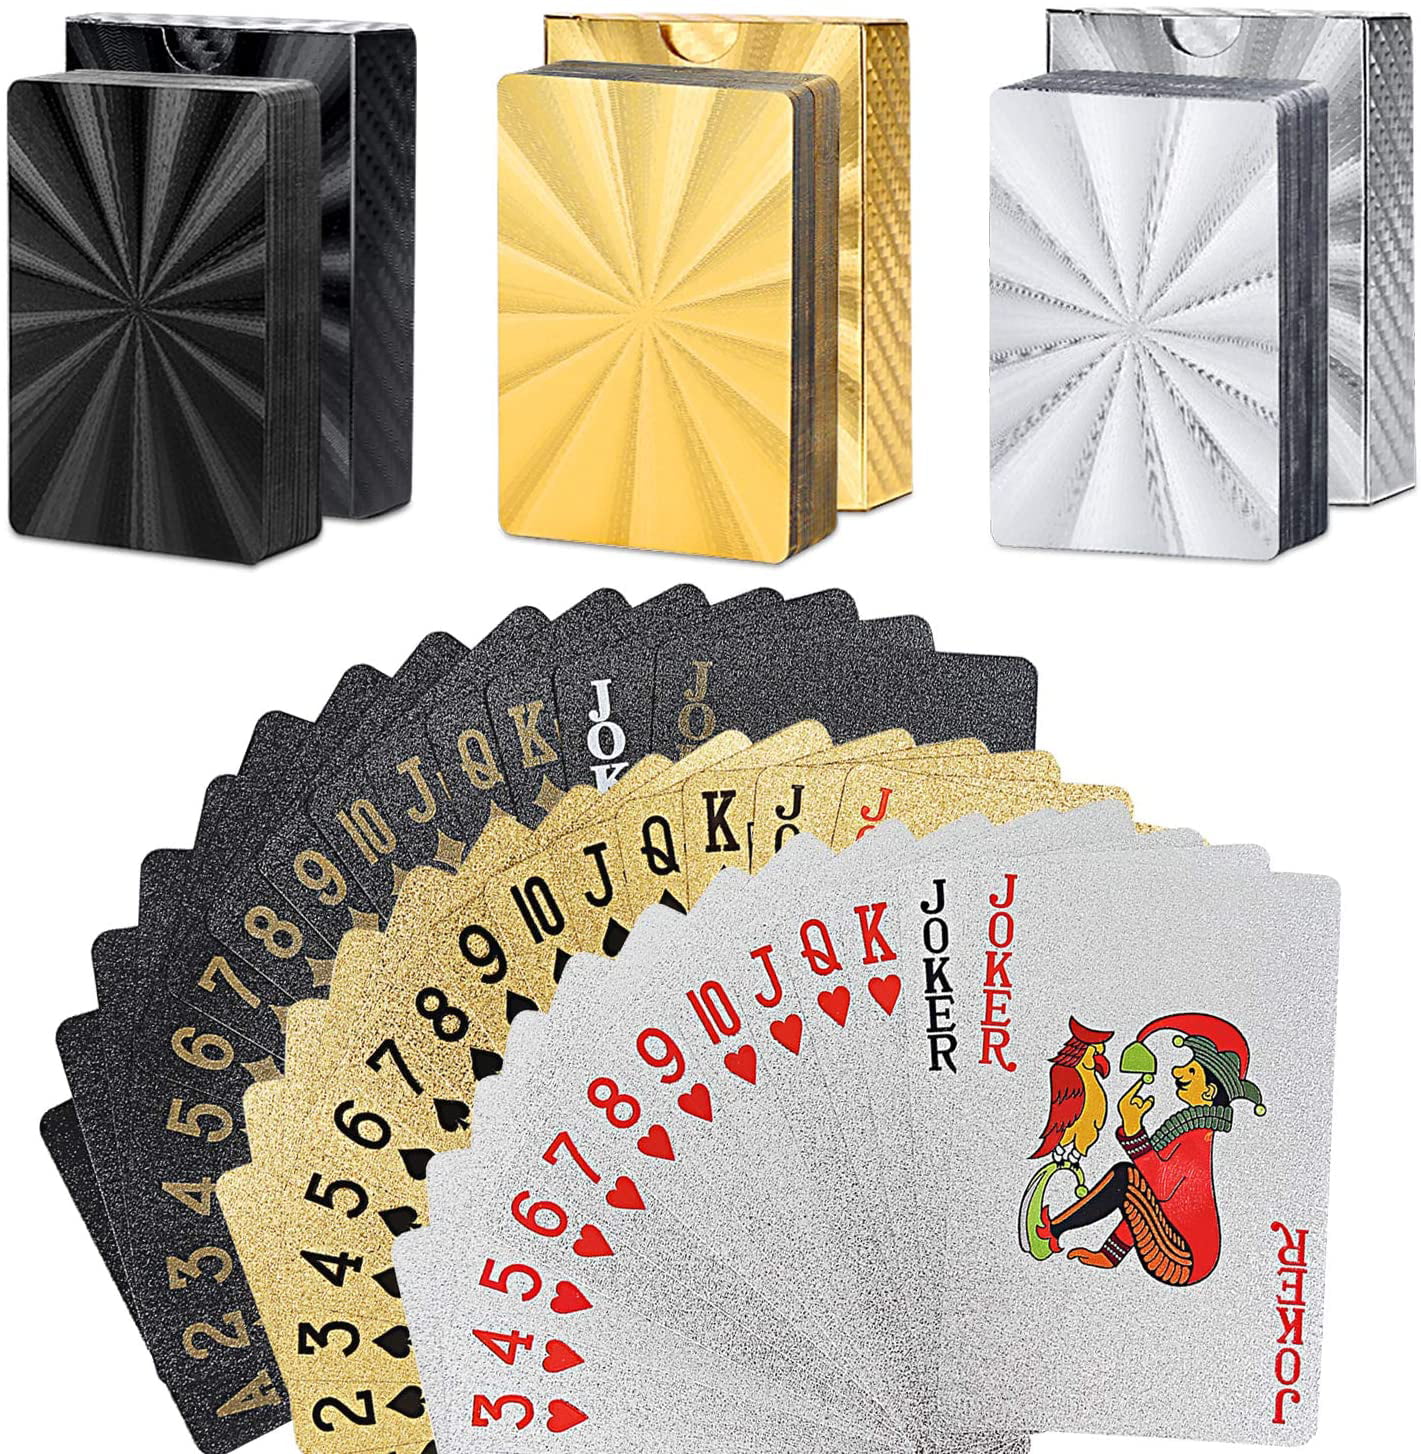 Plastic Foil Poker Cards Gold Silver Black Classic Magic Tricks Tool DoreenAbe Magic Diamond Playing Cards Waterproof Playing Cards Black